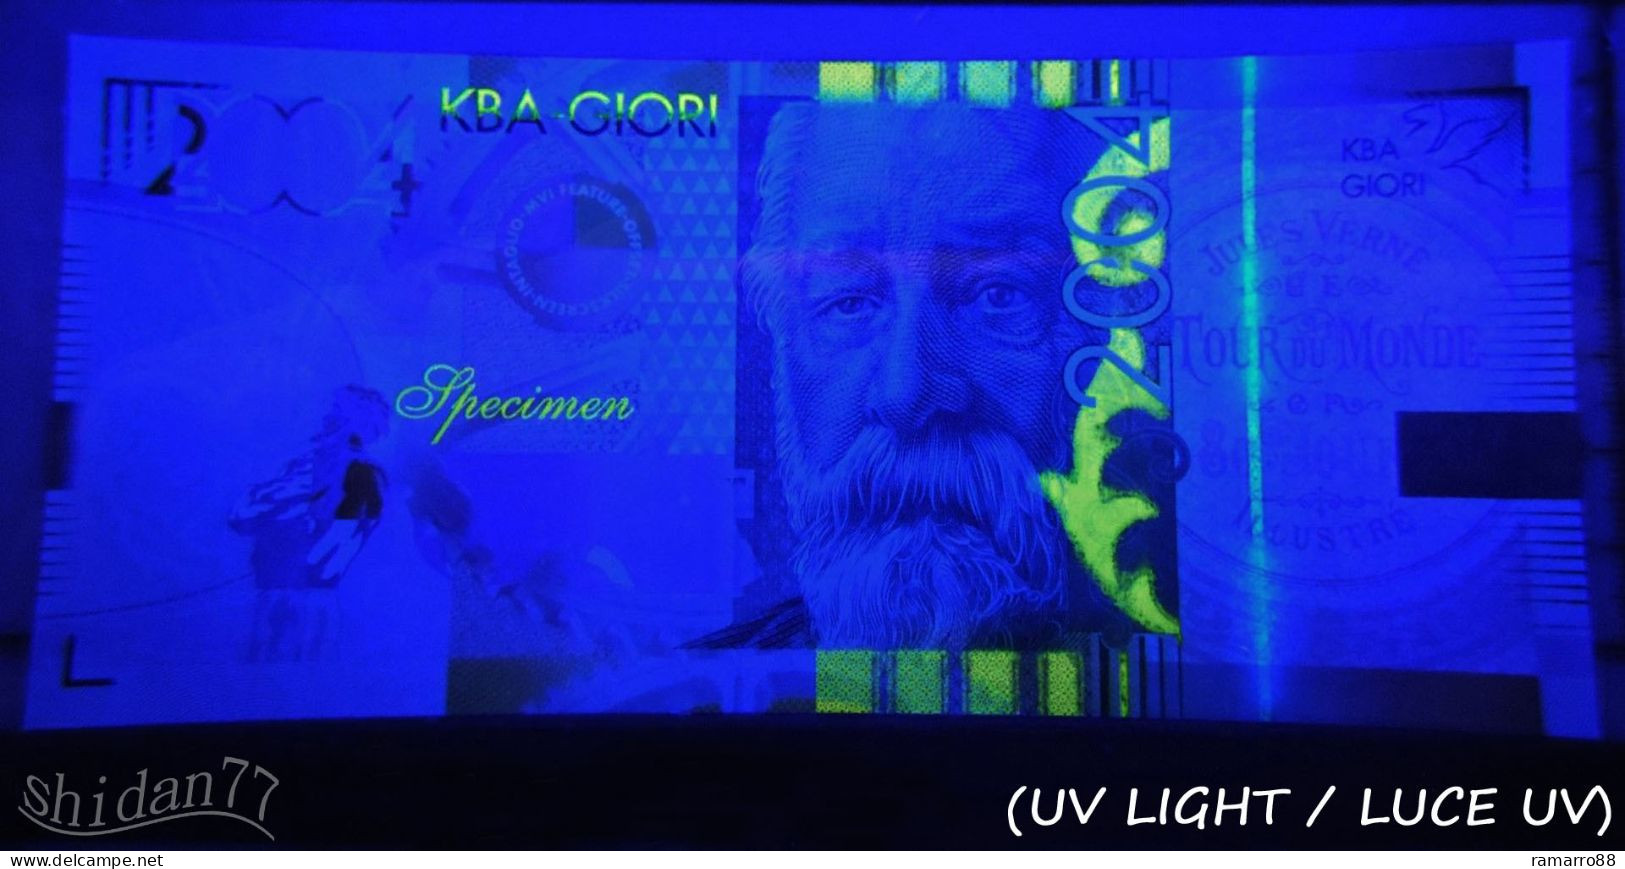 KBA Giori - Set Of 2 Jules Verne 2004 - Types I & II - Specimen Test Notes Unc - Specimen